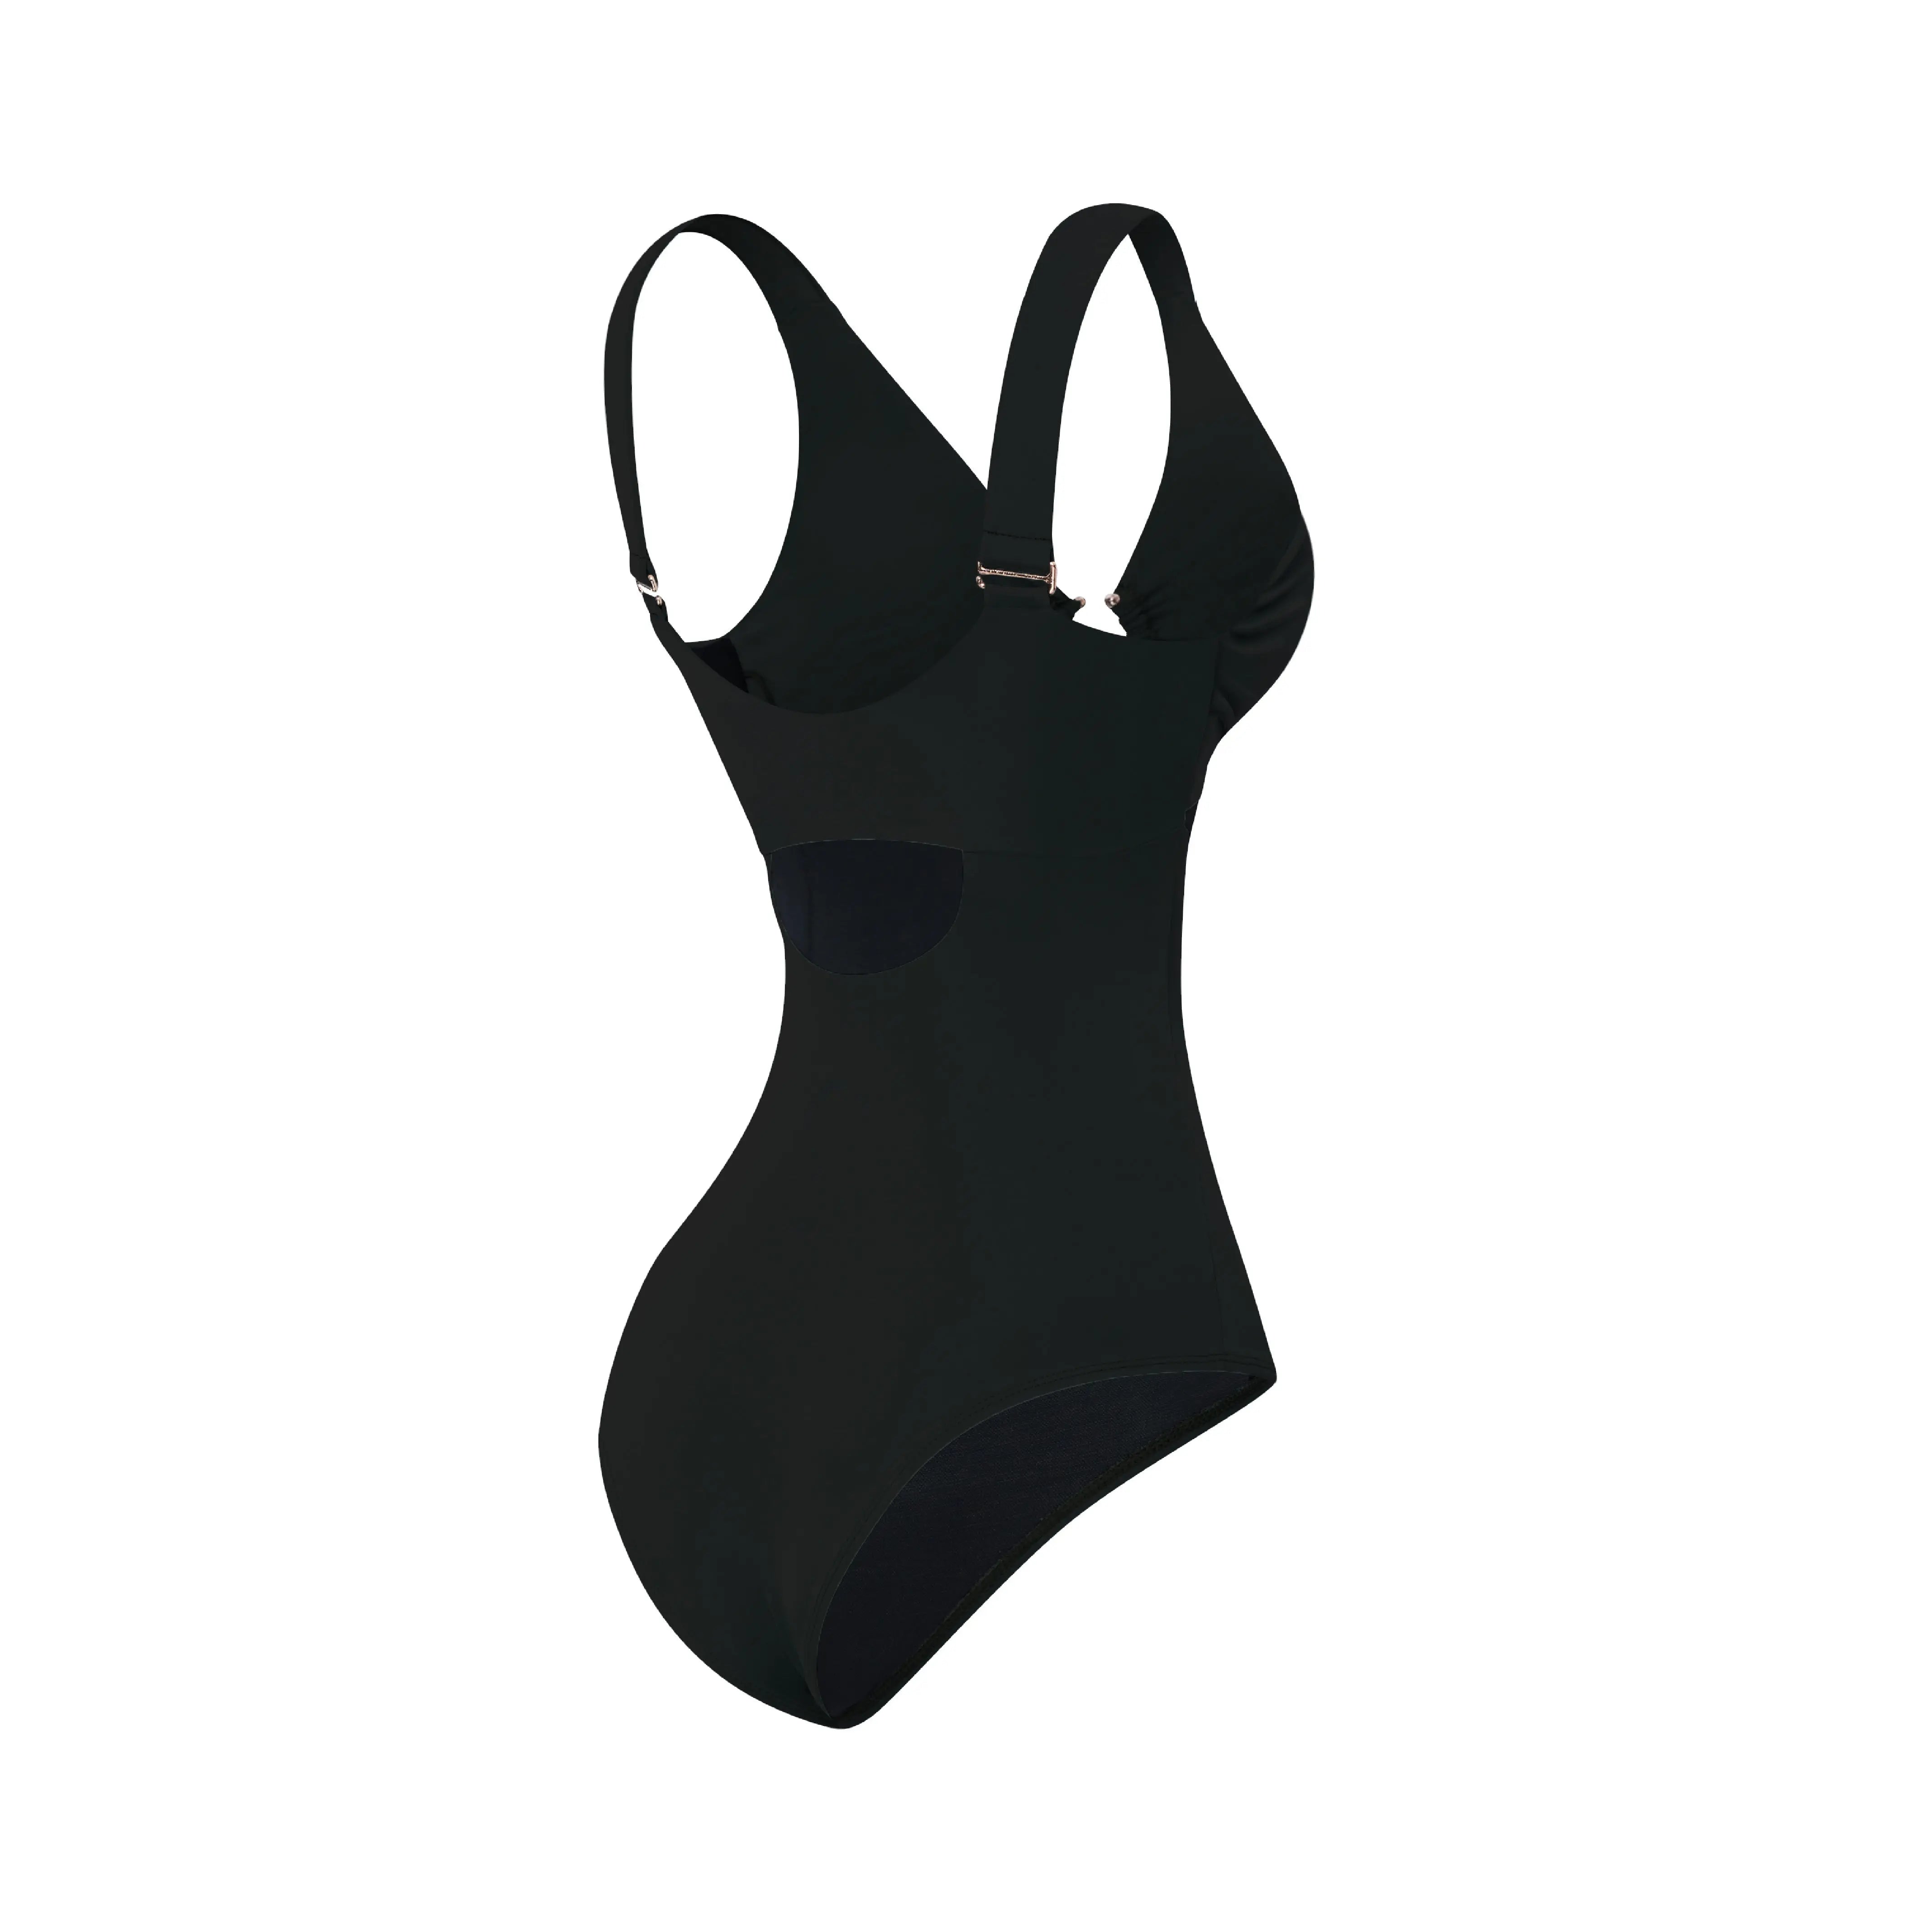 One-piece swimsuit with ironwork on neckline.